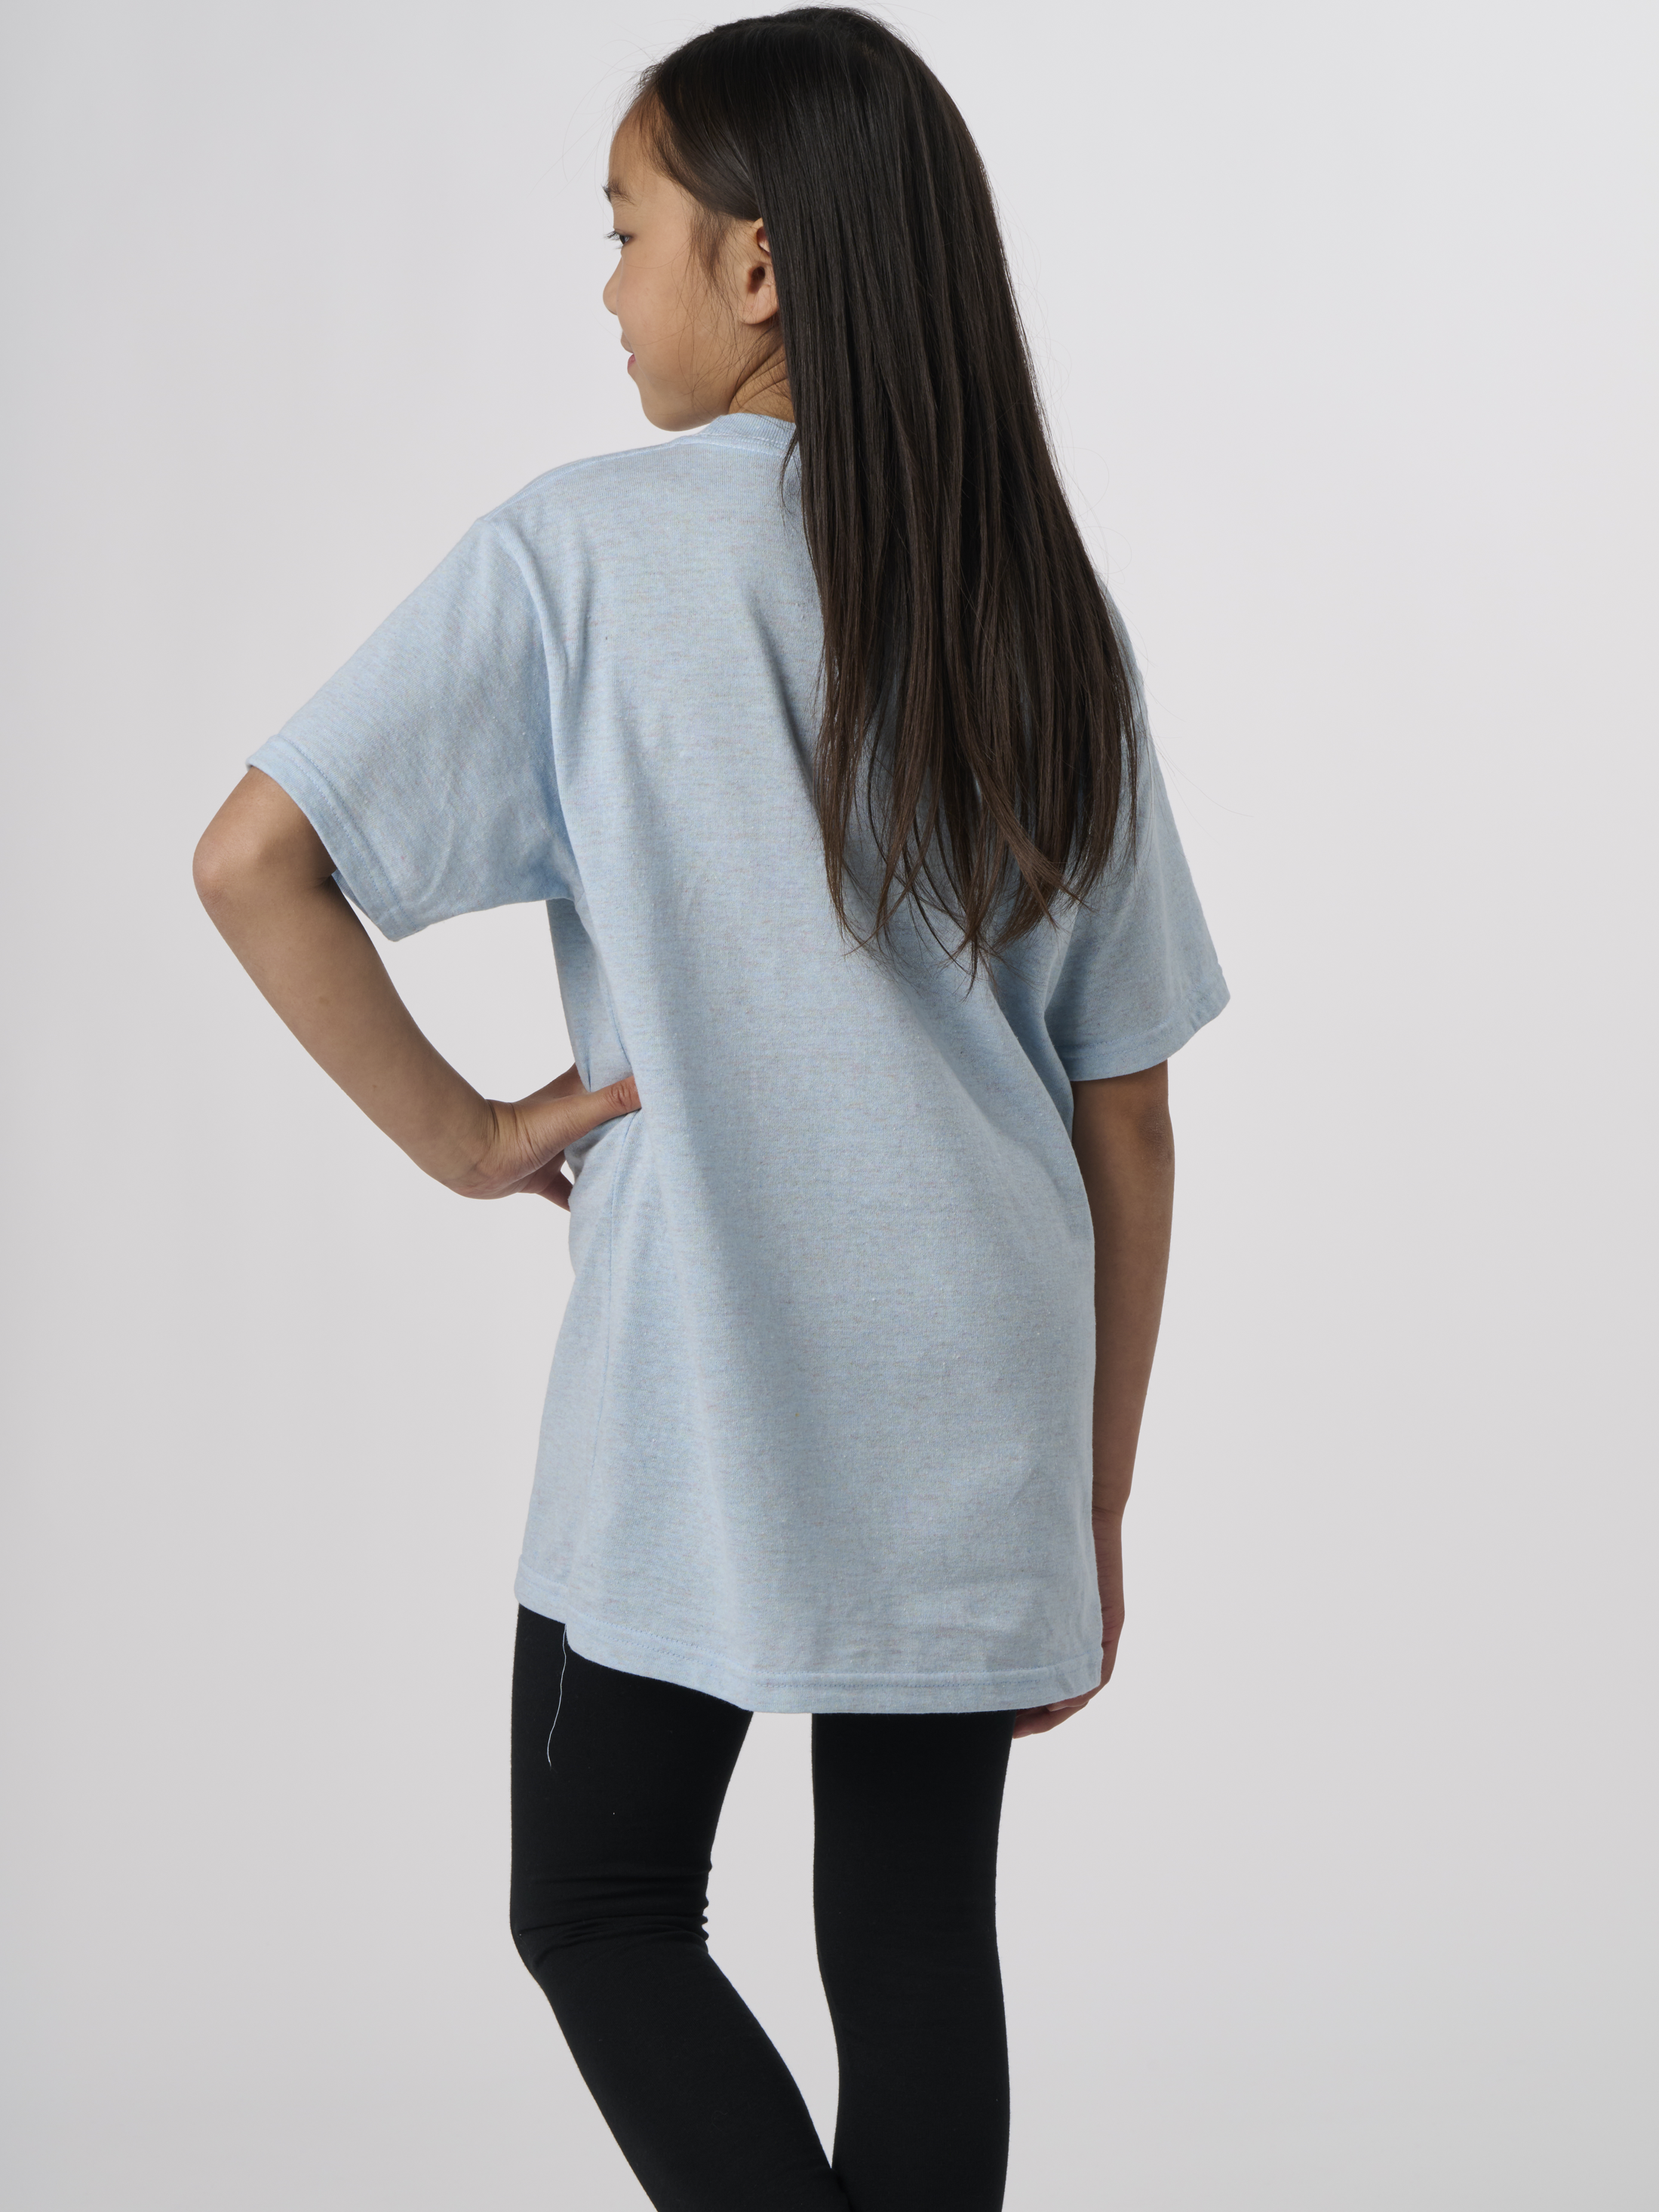 RY100 - Youth Classic Short Sleeve T-Shirt